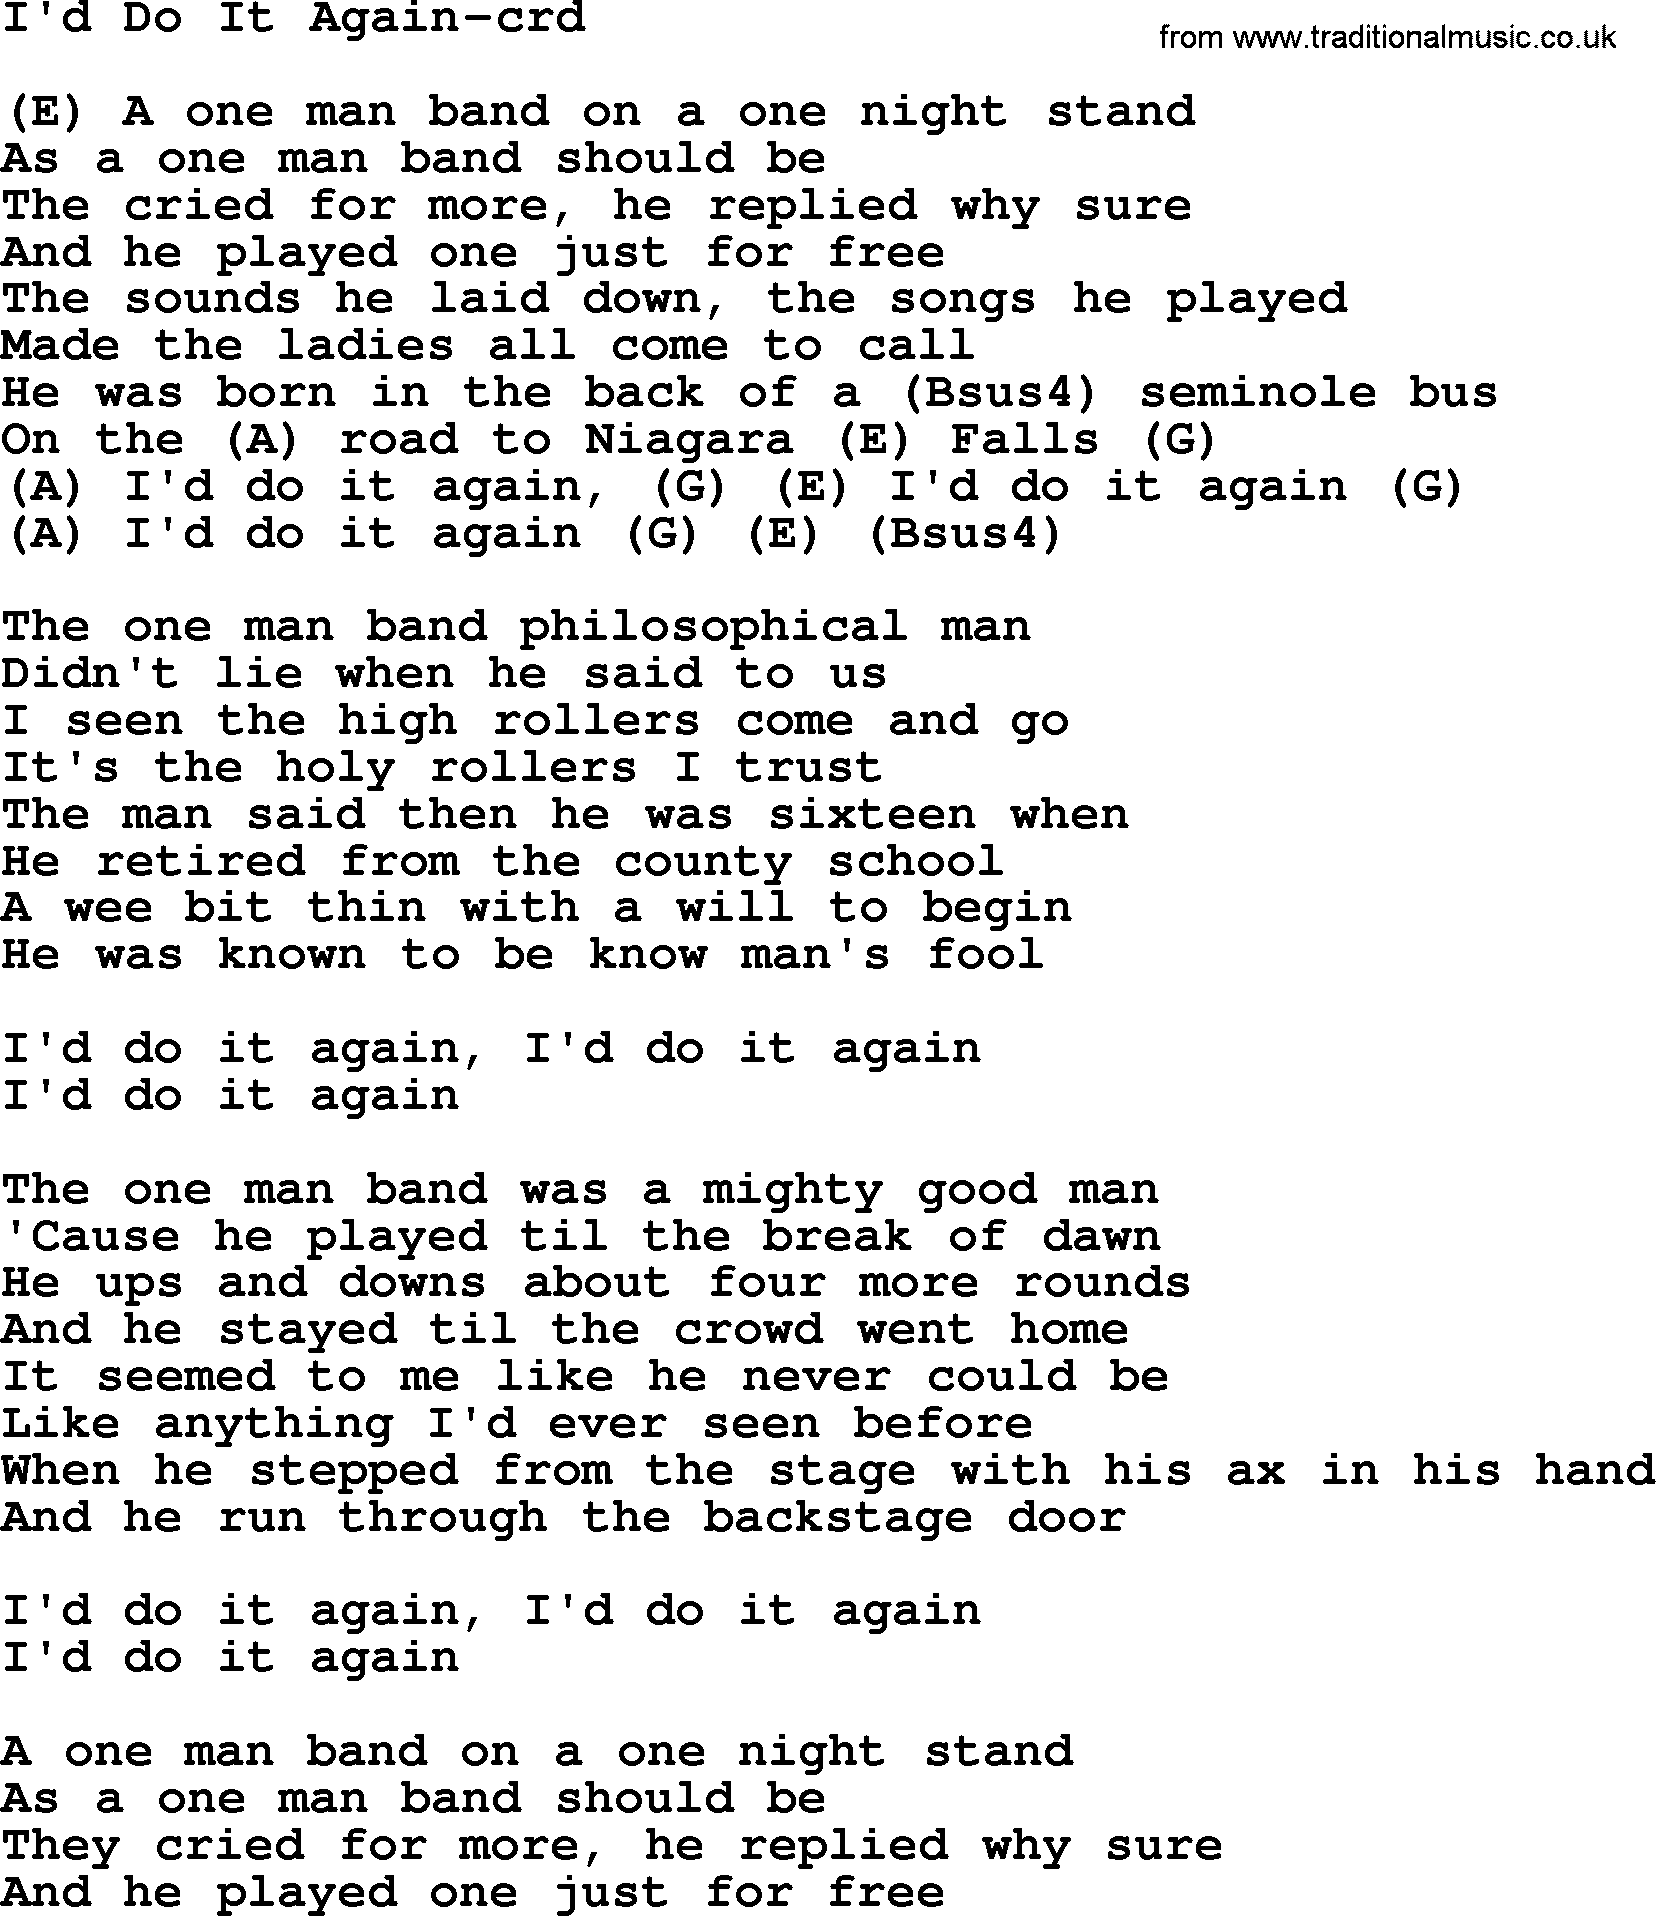 I'd Do It Again, by Gordon Lightfoot, lyrics and chords - Do It Do It Song